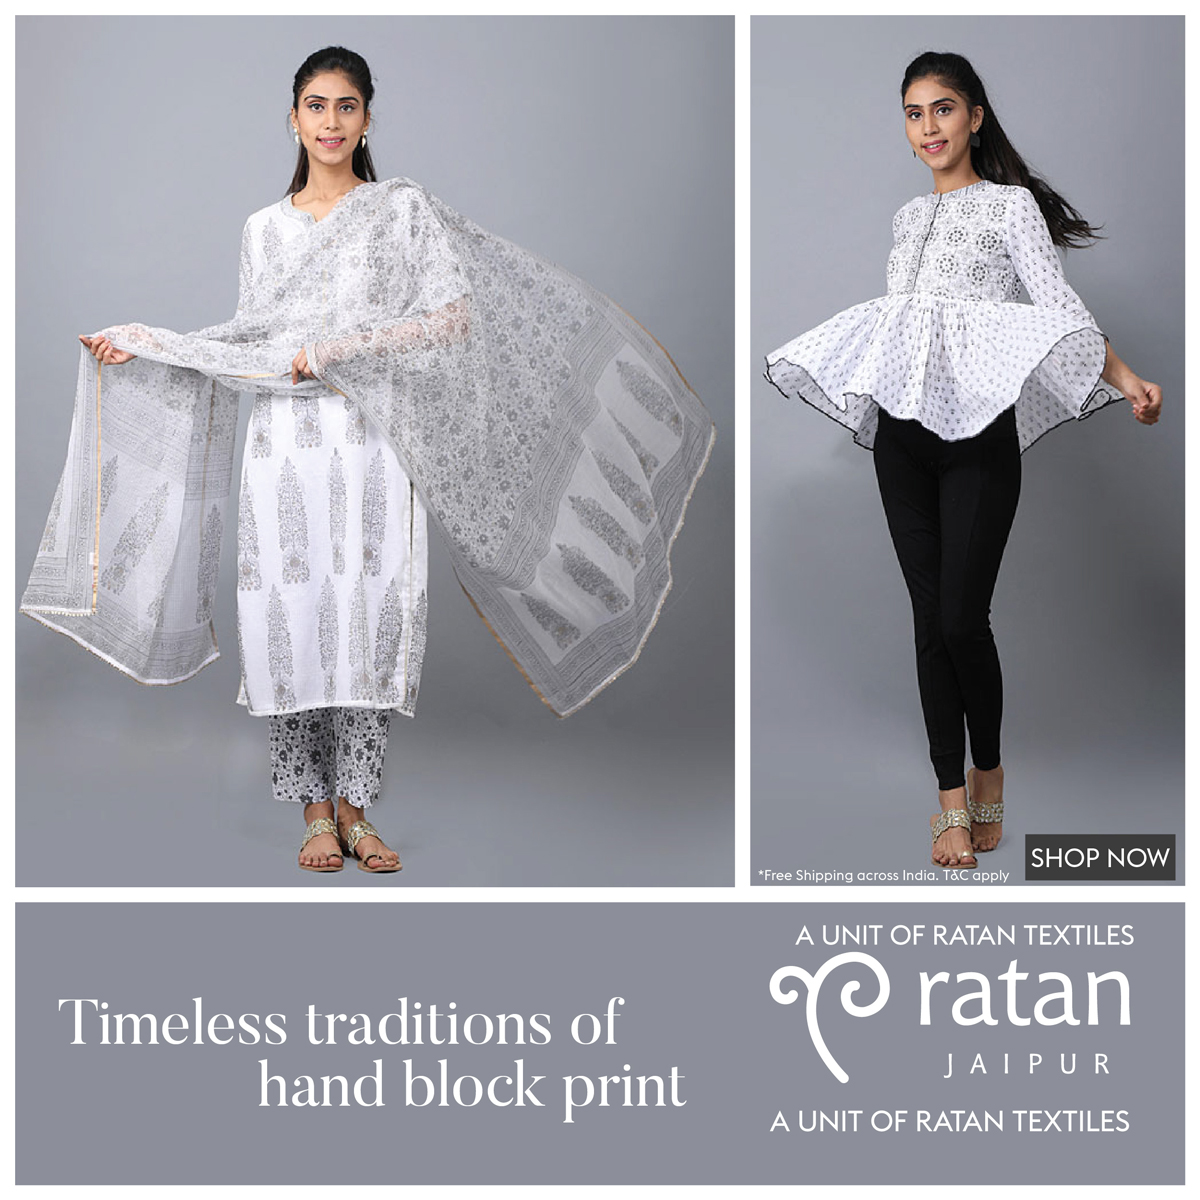 Ratan Jaipur Hand Block Printed Products